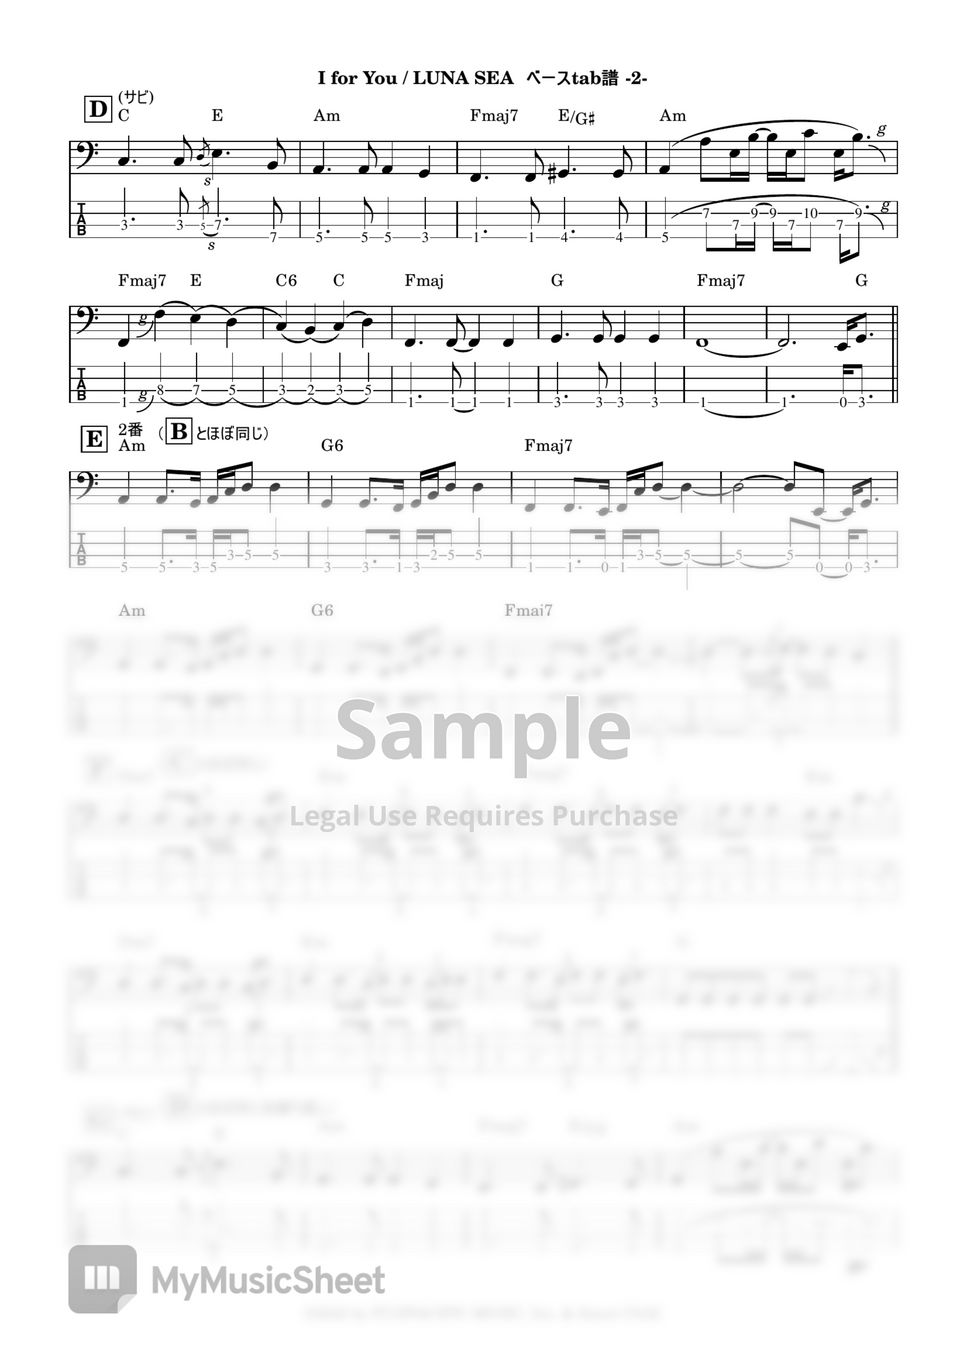 LUNA SEA - I for You (Bass tabs & MIDI) by Kensaku Suzuki